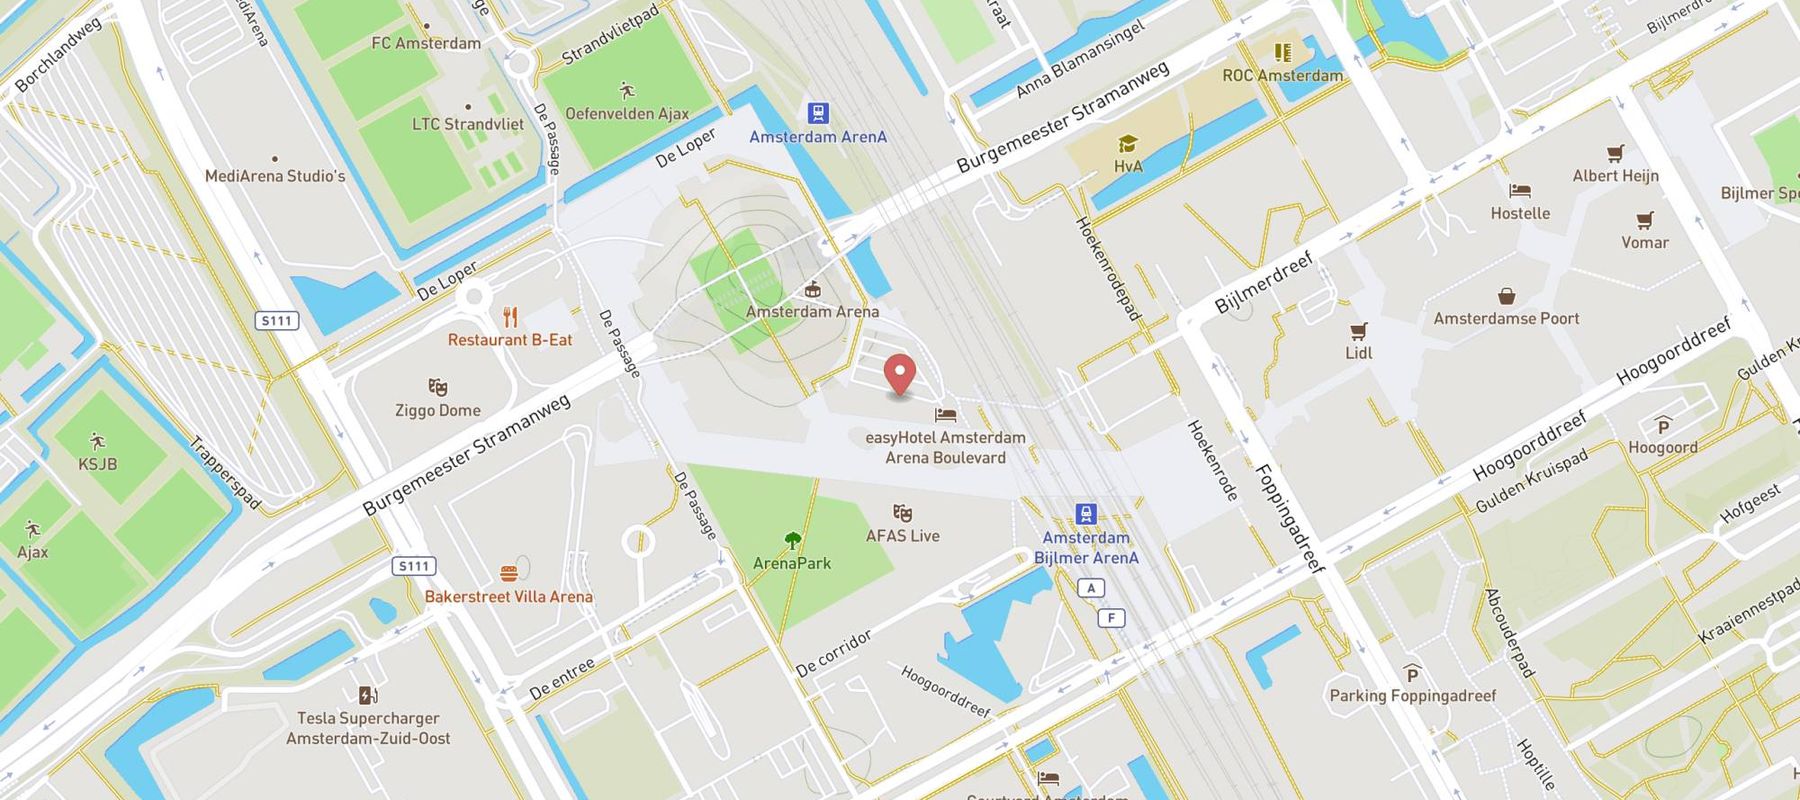 easyHotel Amsterdam Arena Boulevard map